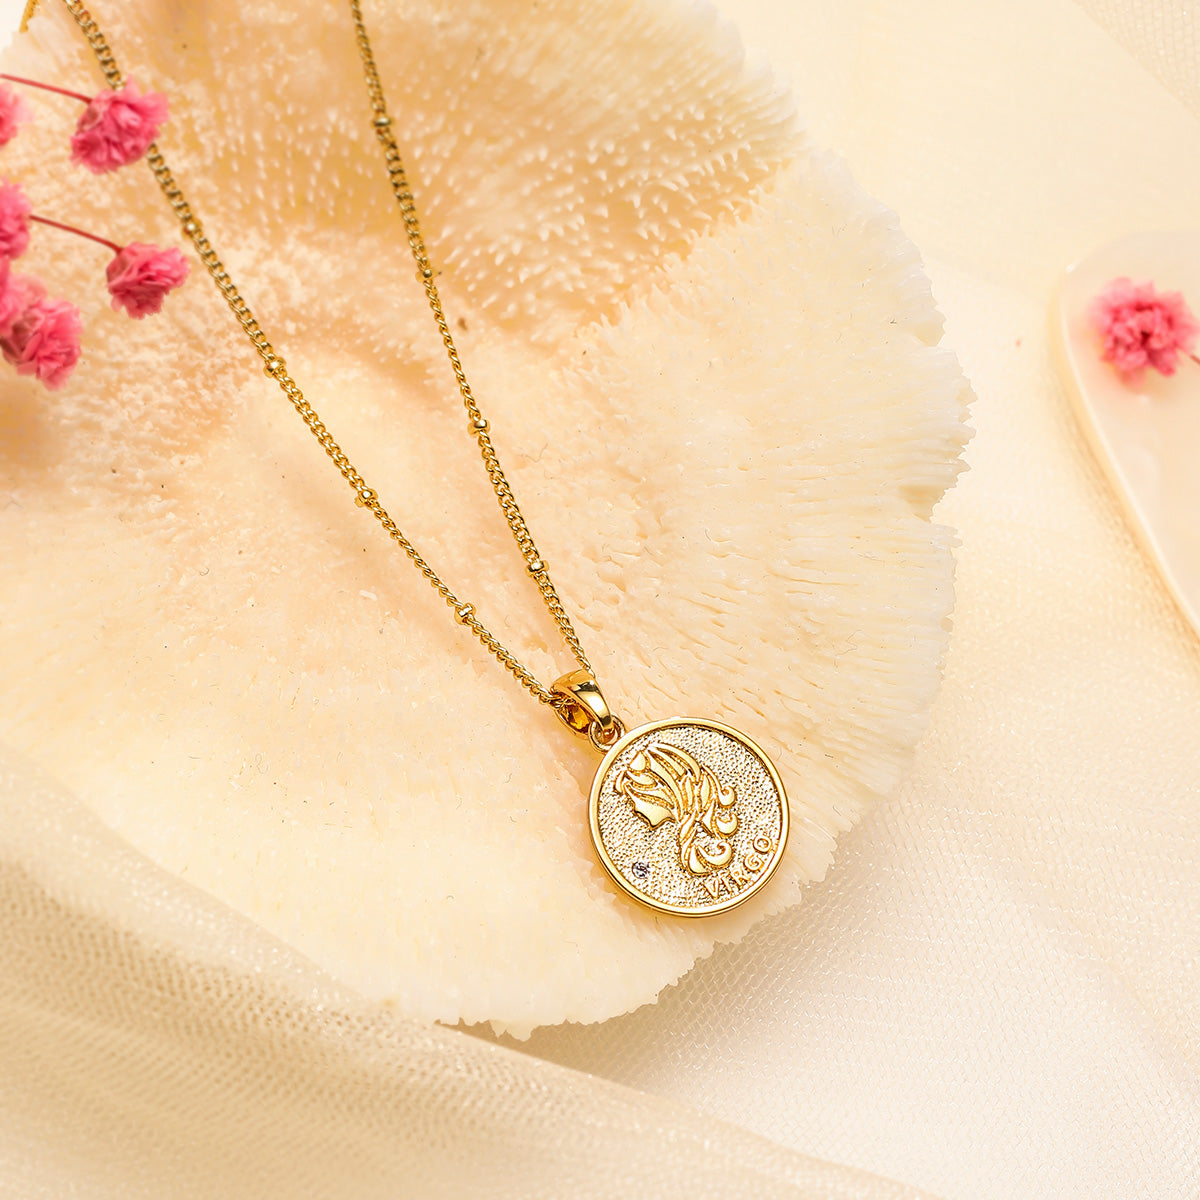 Virgo Constellation Coin Pendant Astrology Necklace